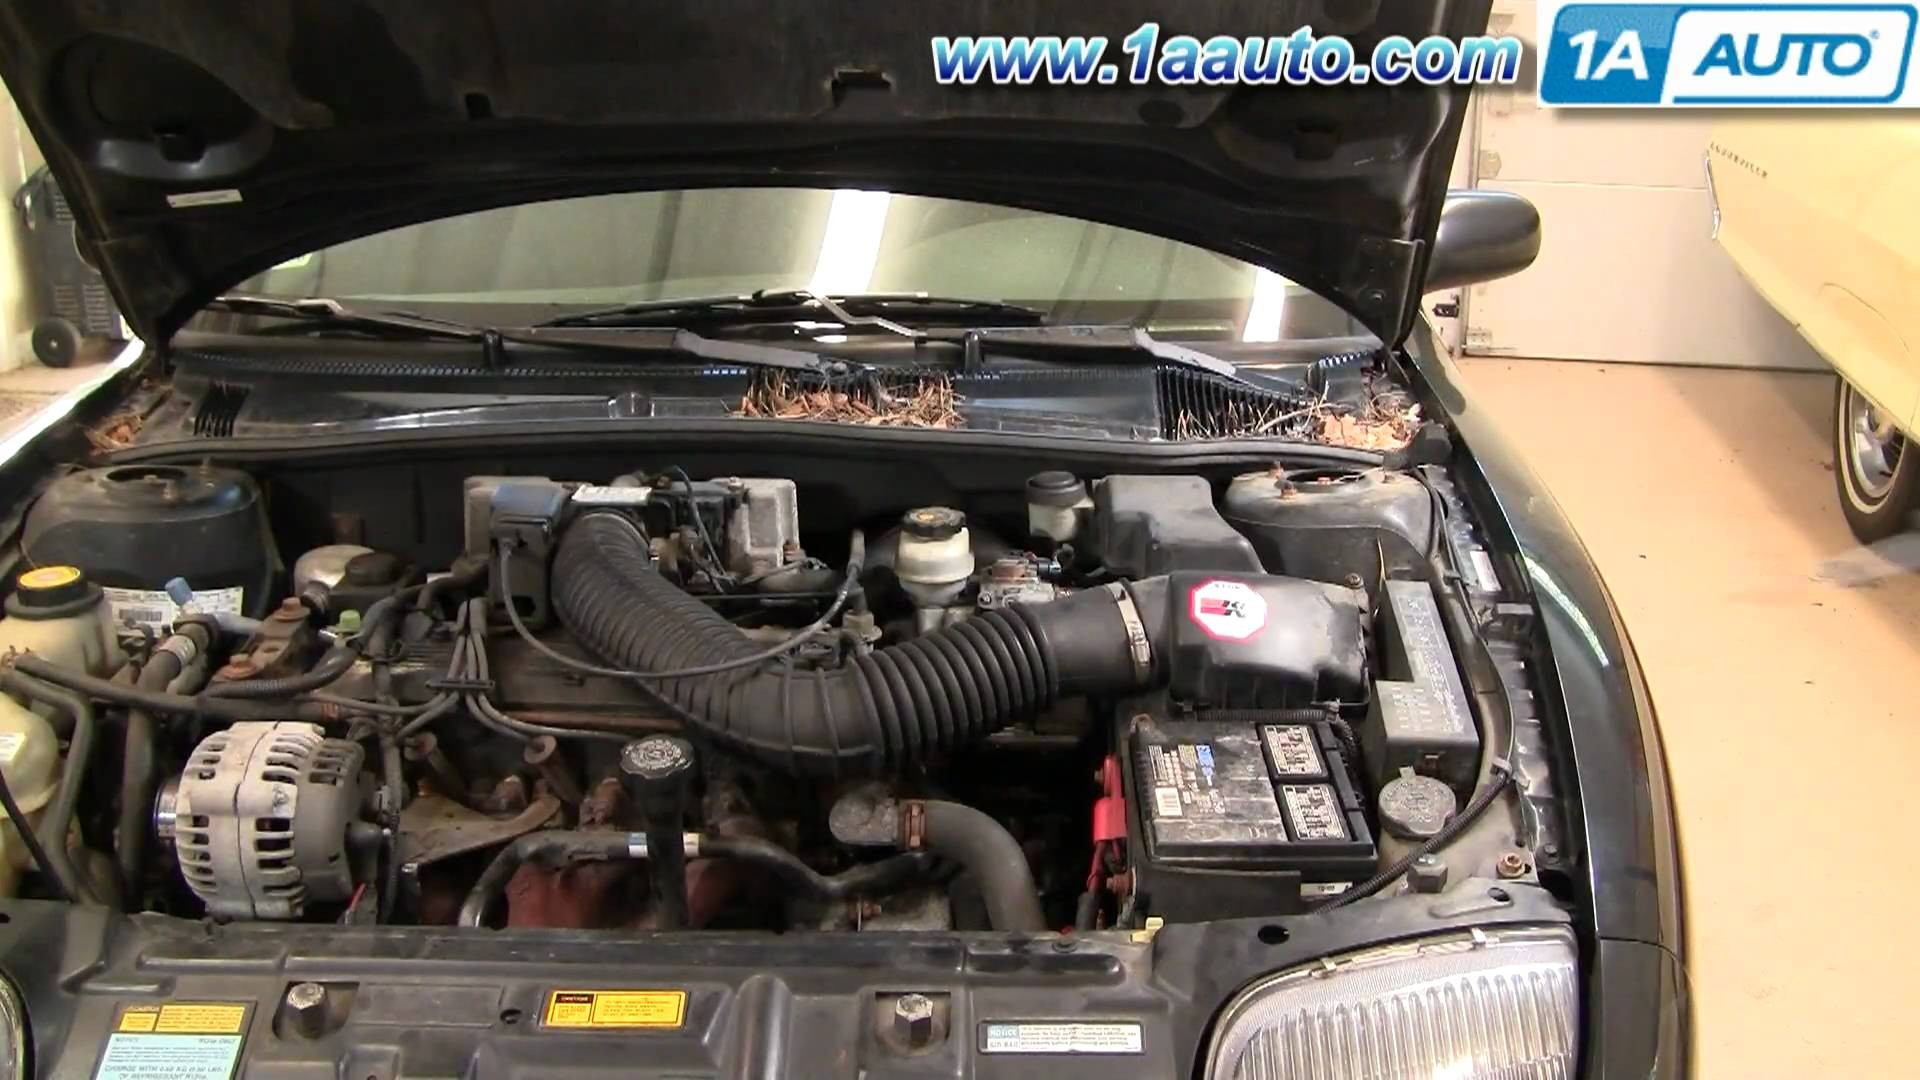 1998 Chevy Cavalier Engine Diagram How to Install Replace Intake Hose Chevy Cavalier Pontiac Sunfire 95 Of 1998 Chevy Cavalier Engine Diagram